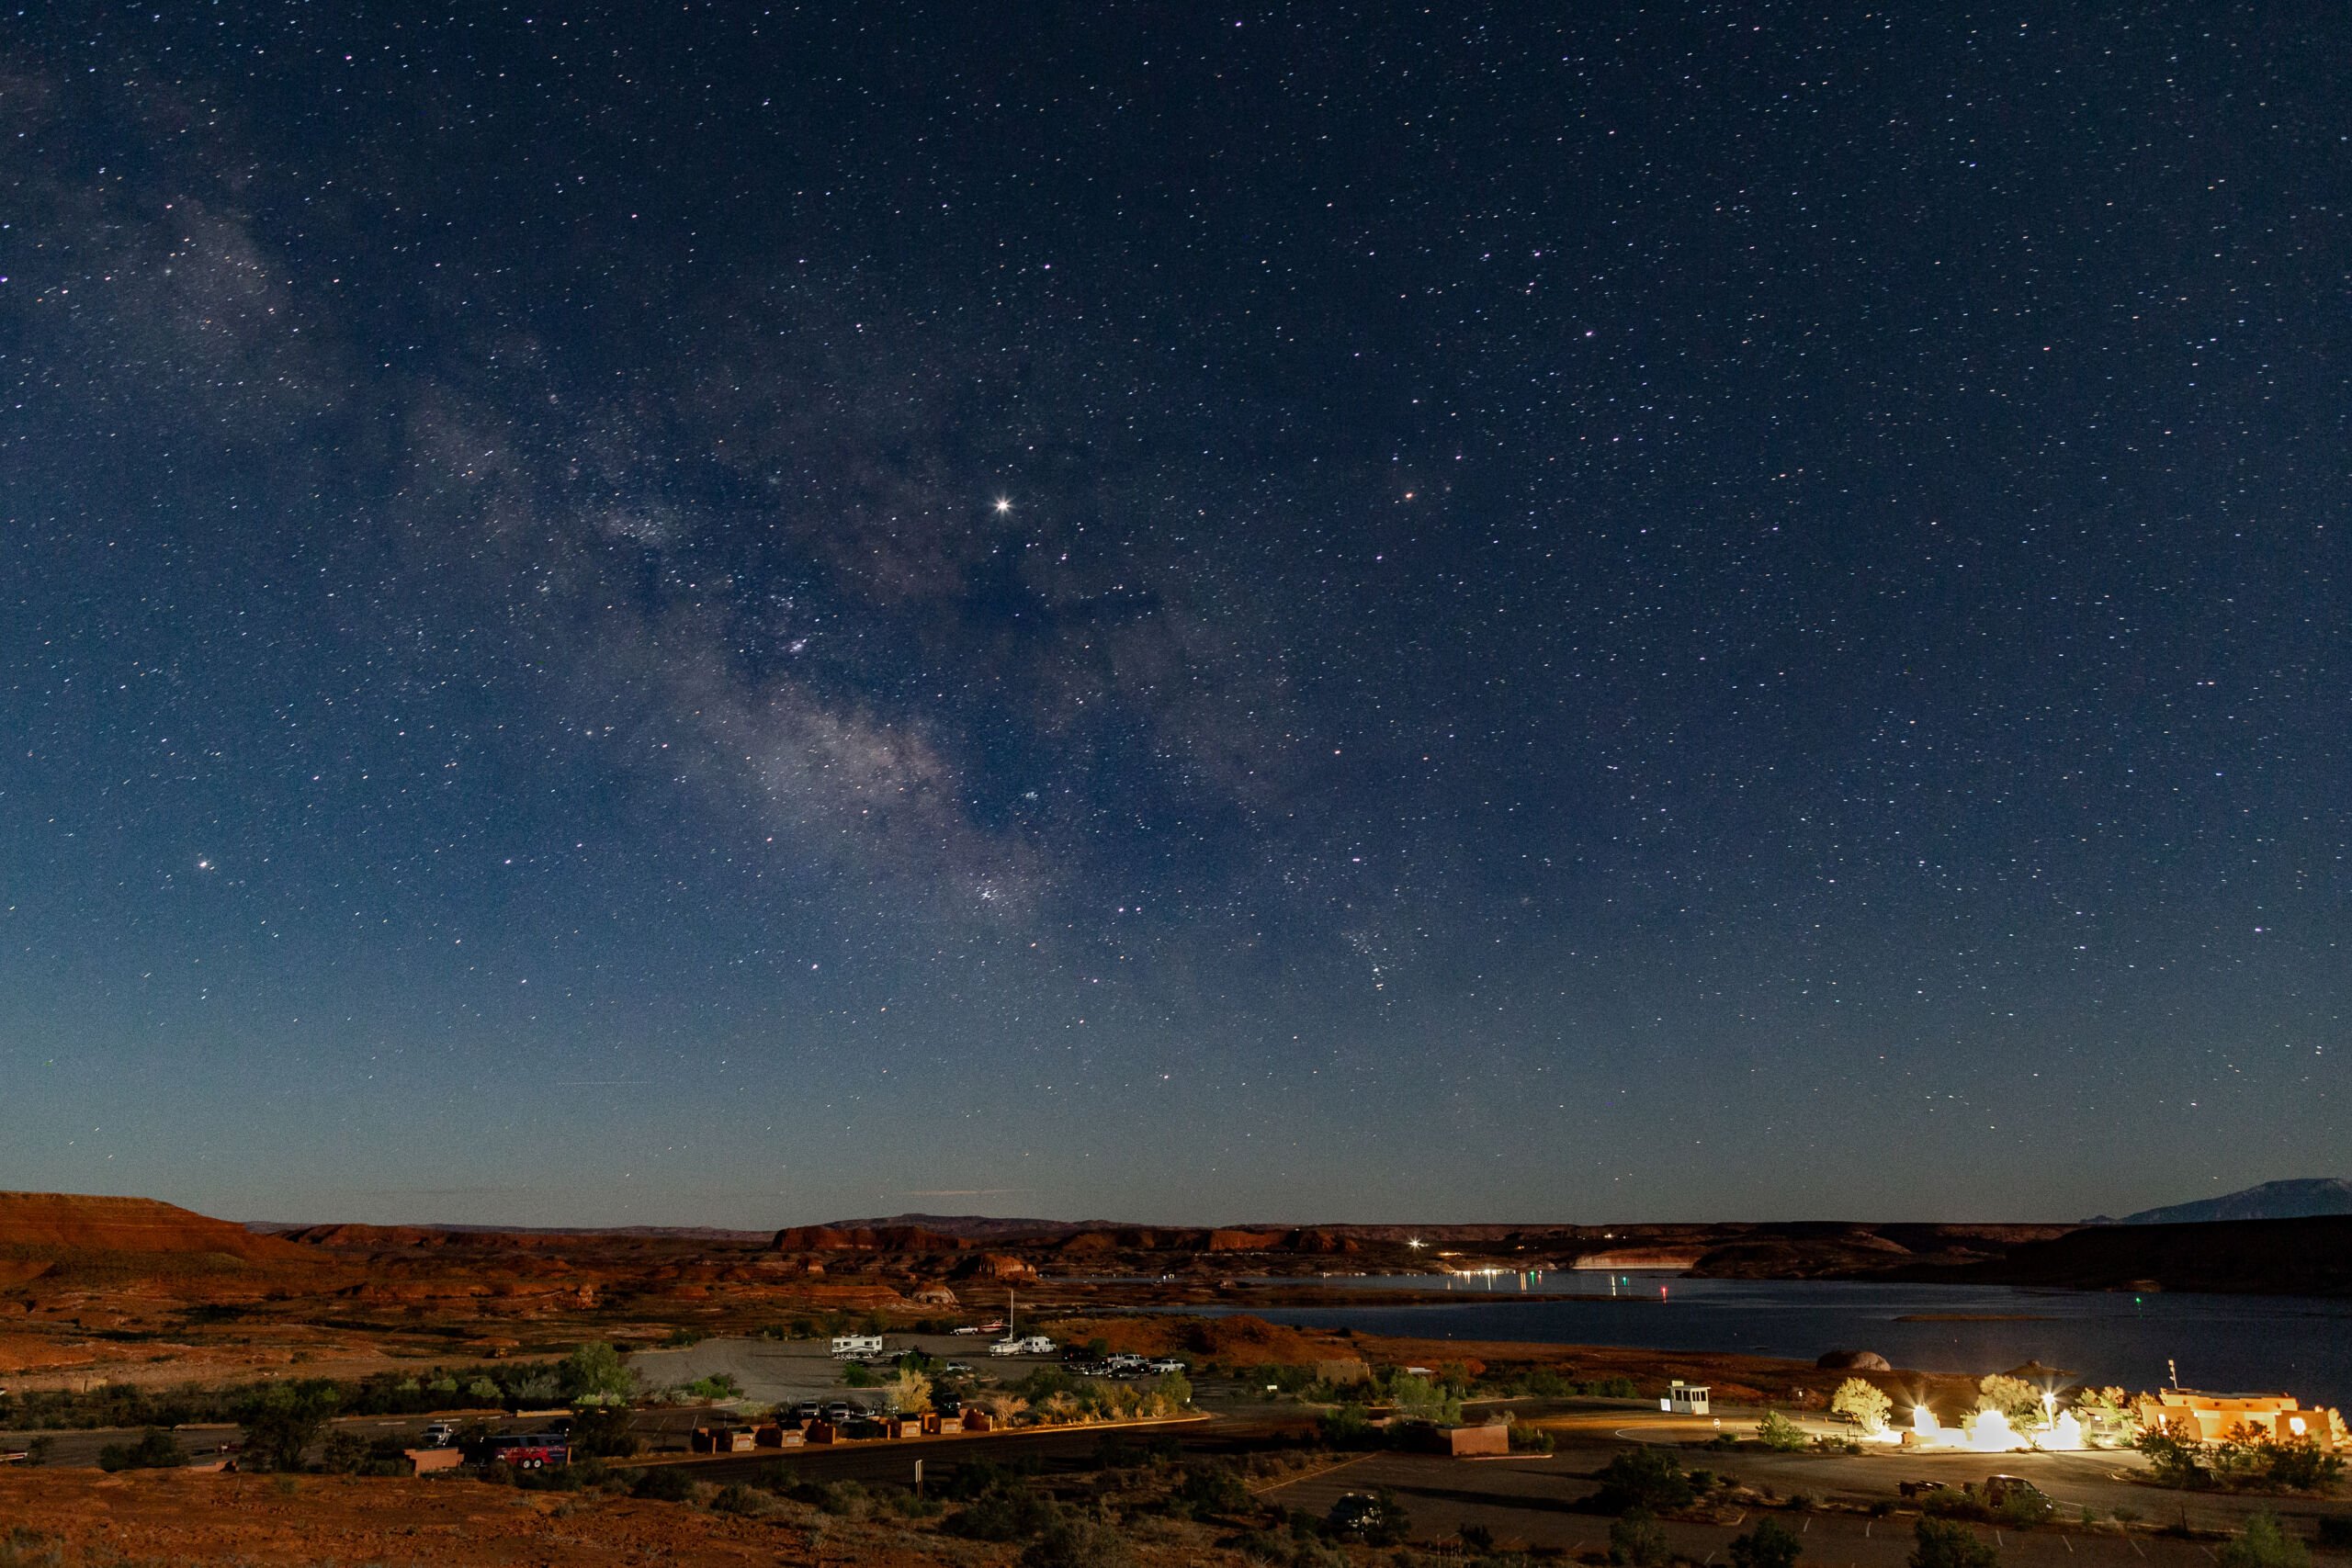 The Milky Way showing off the dark sky of Utah